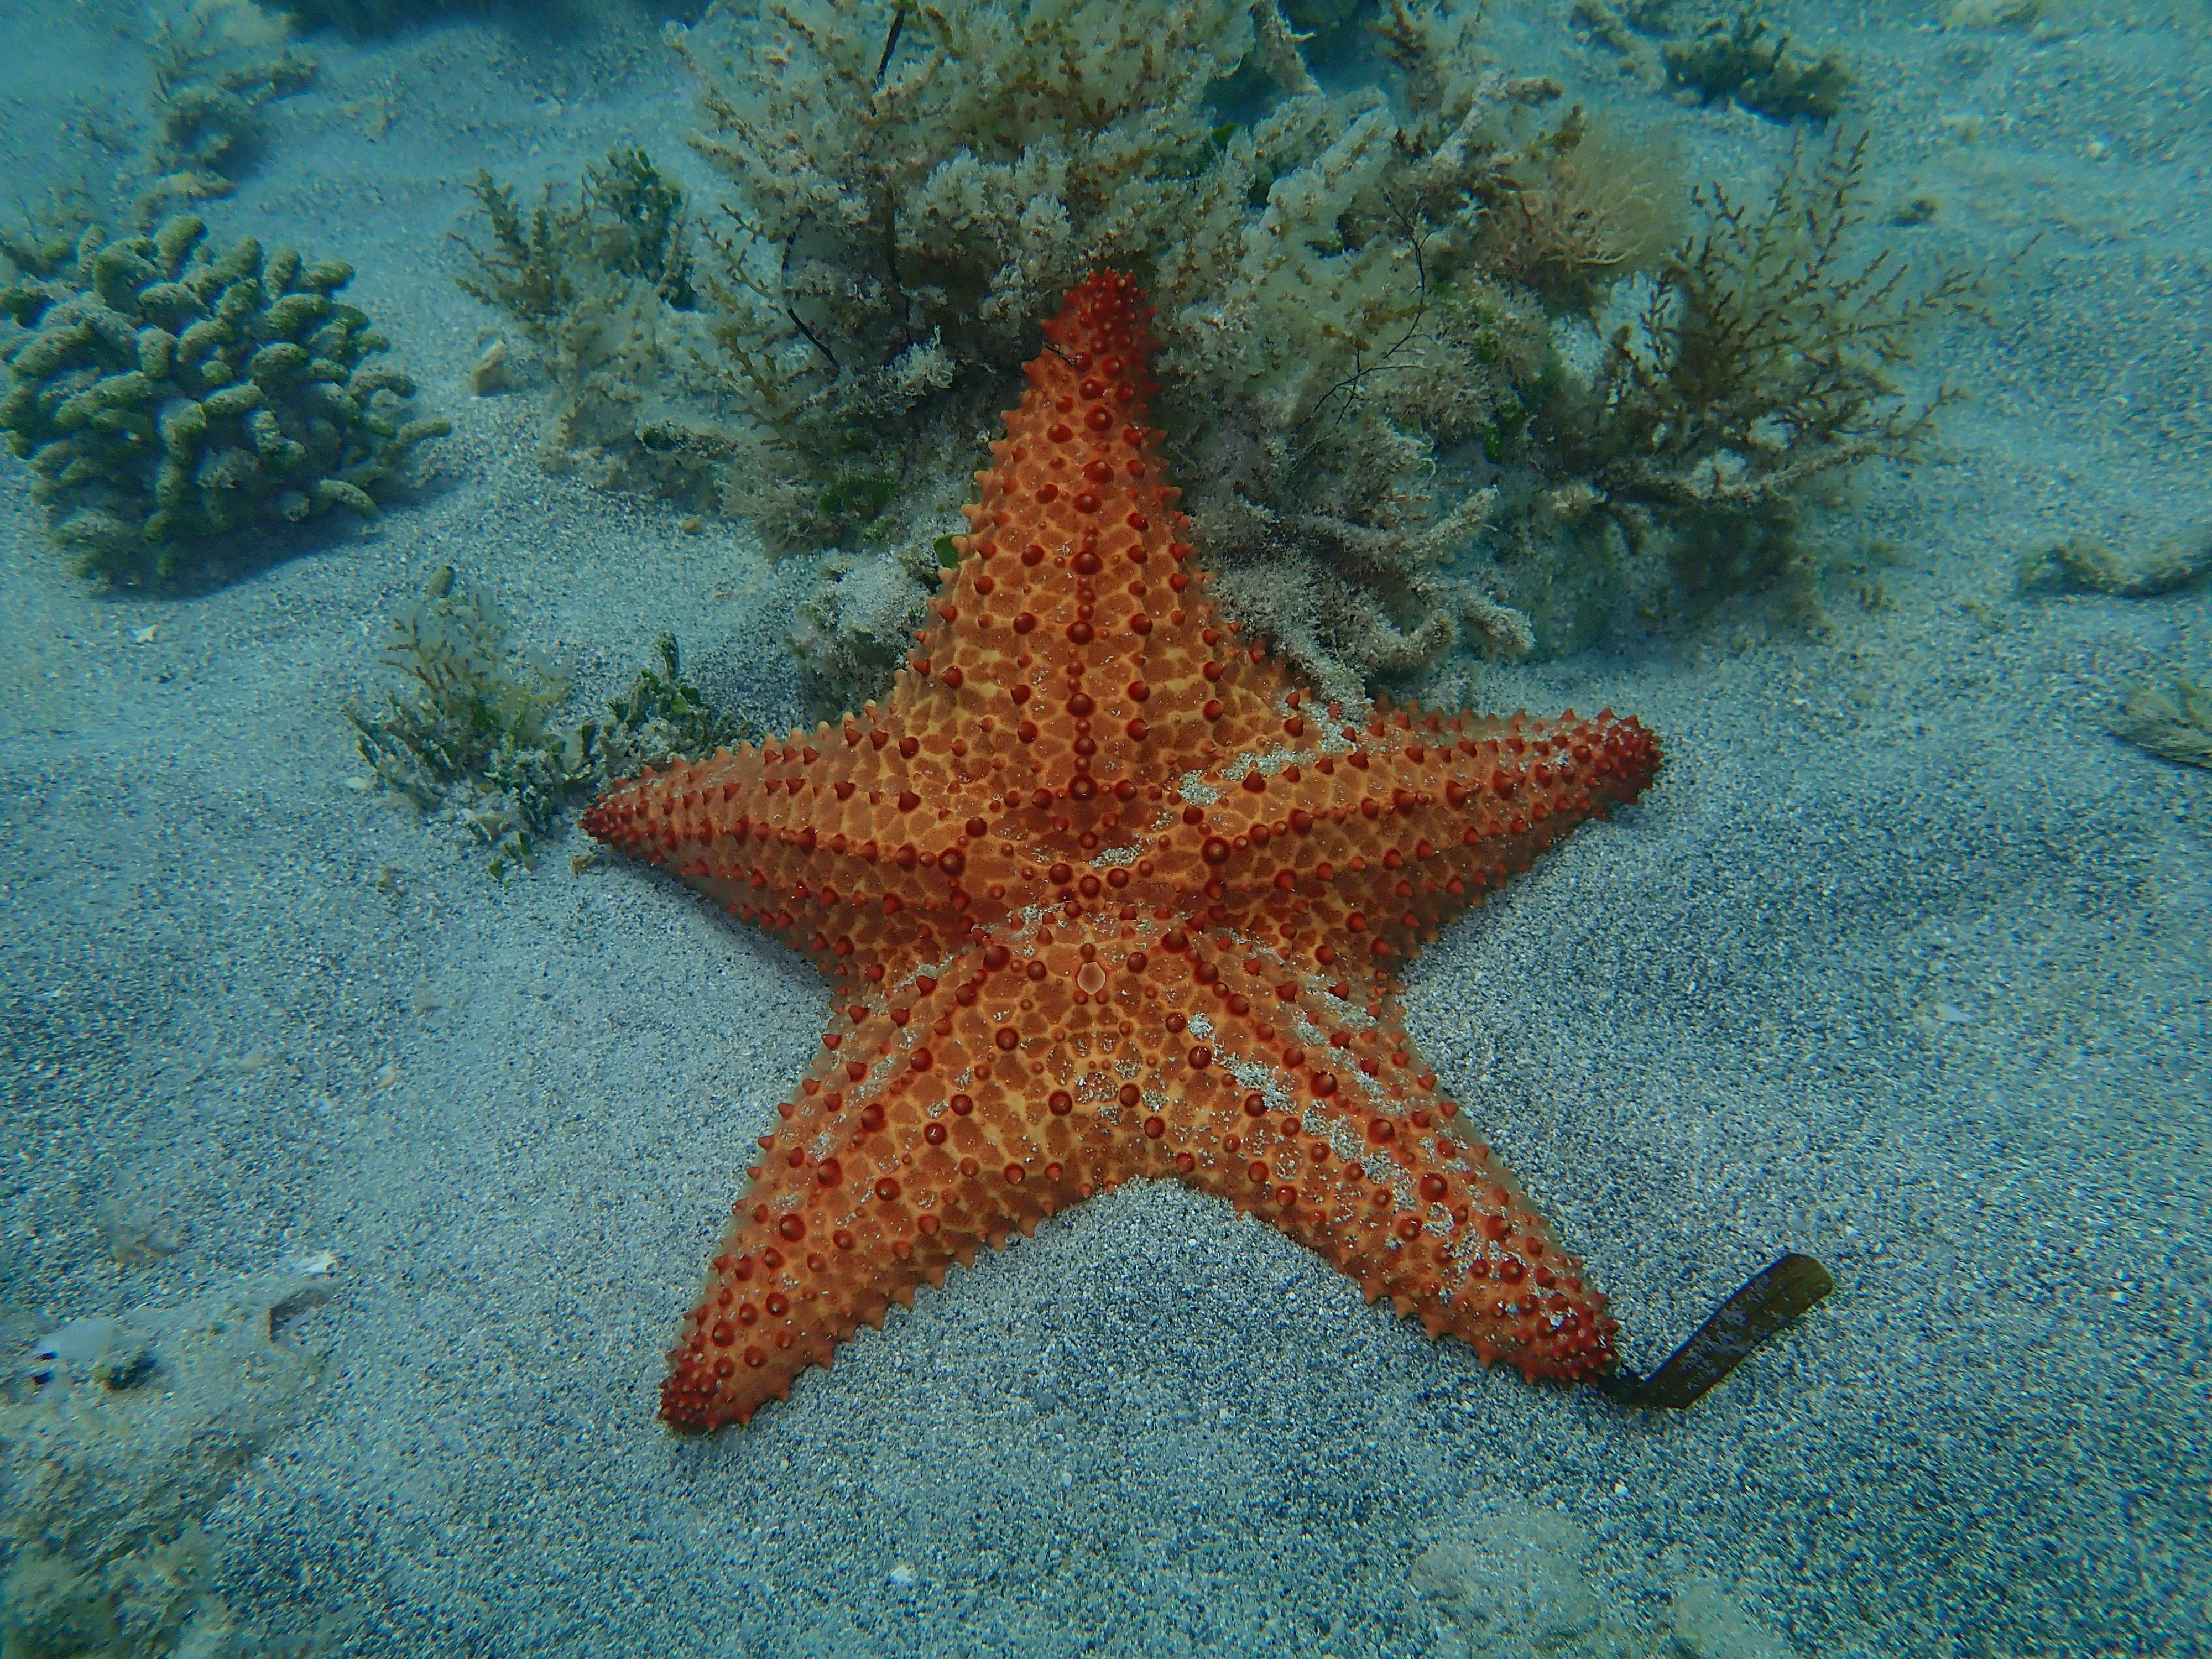 Red Cushion Sea Star, Oreaster reticulatus